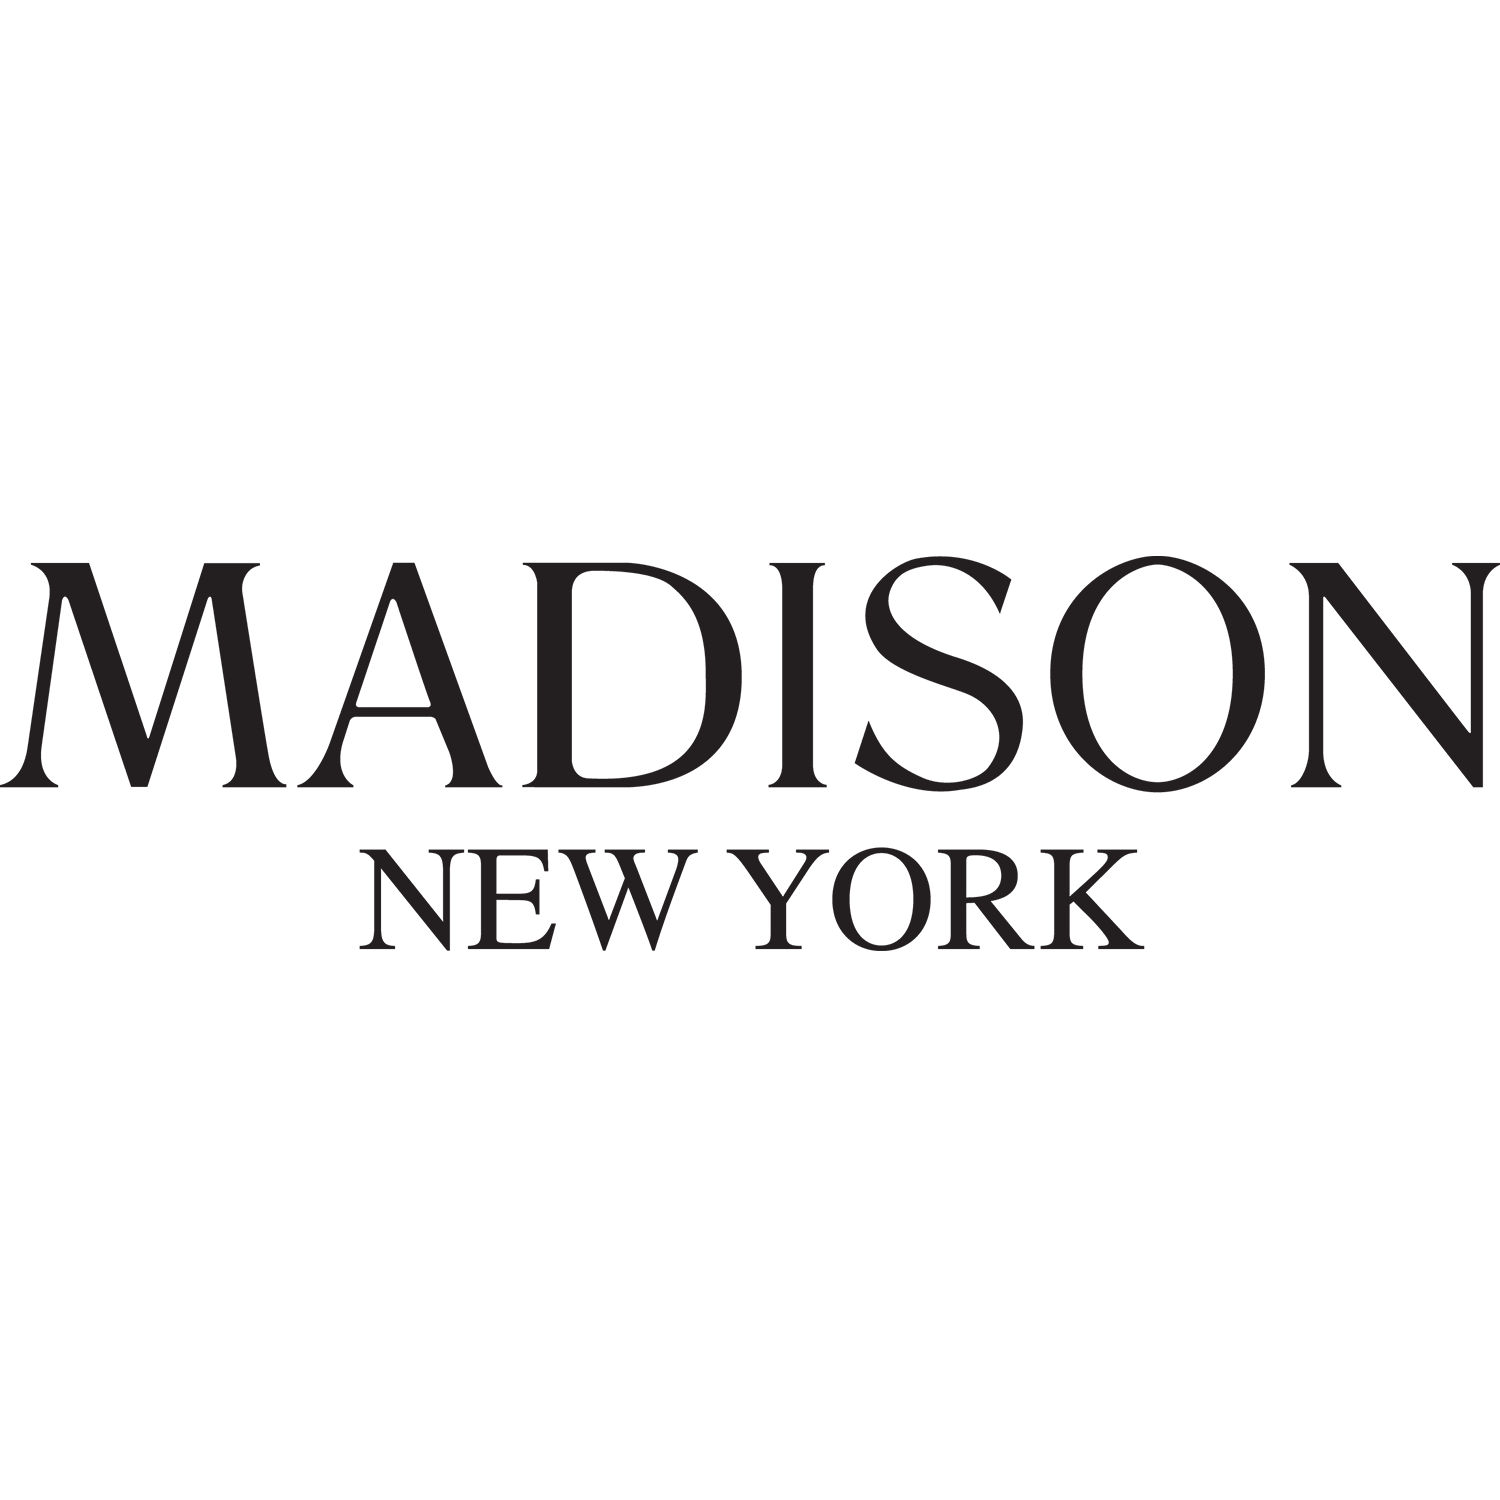 Madison New York